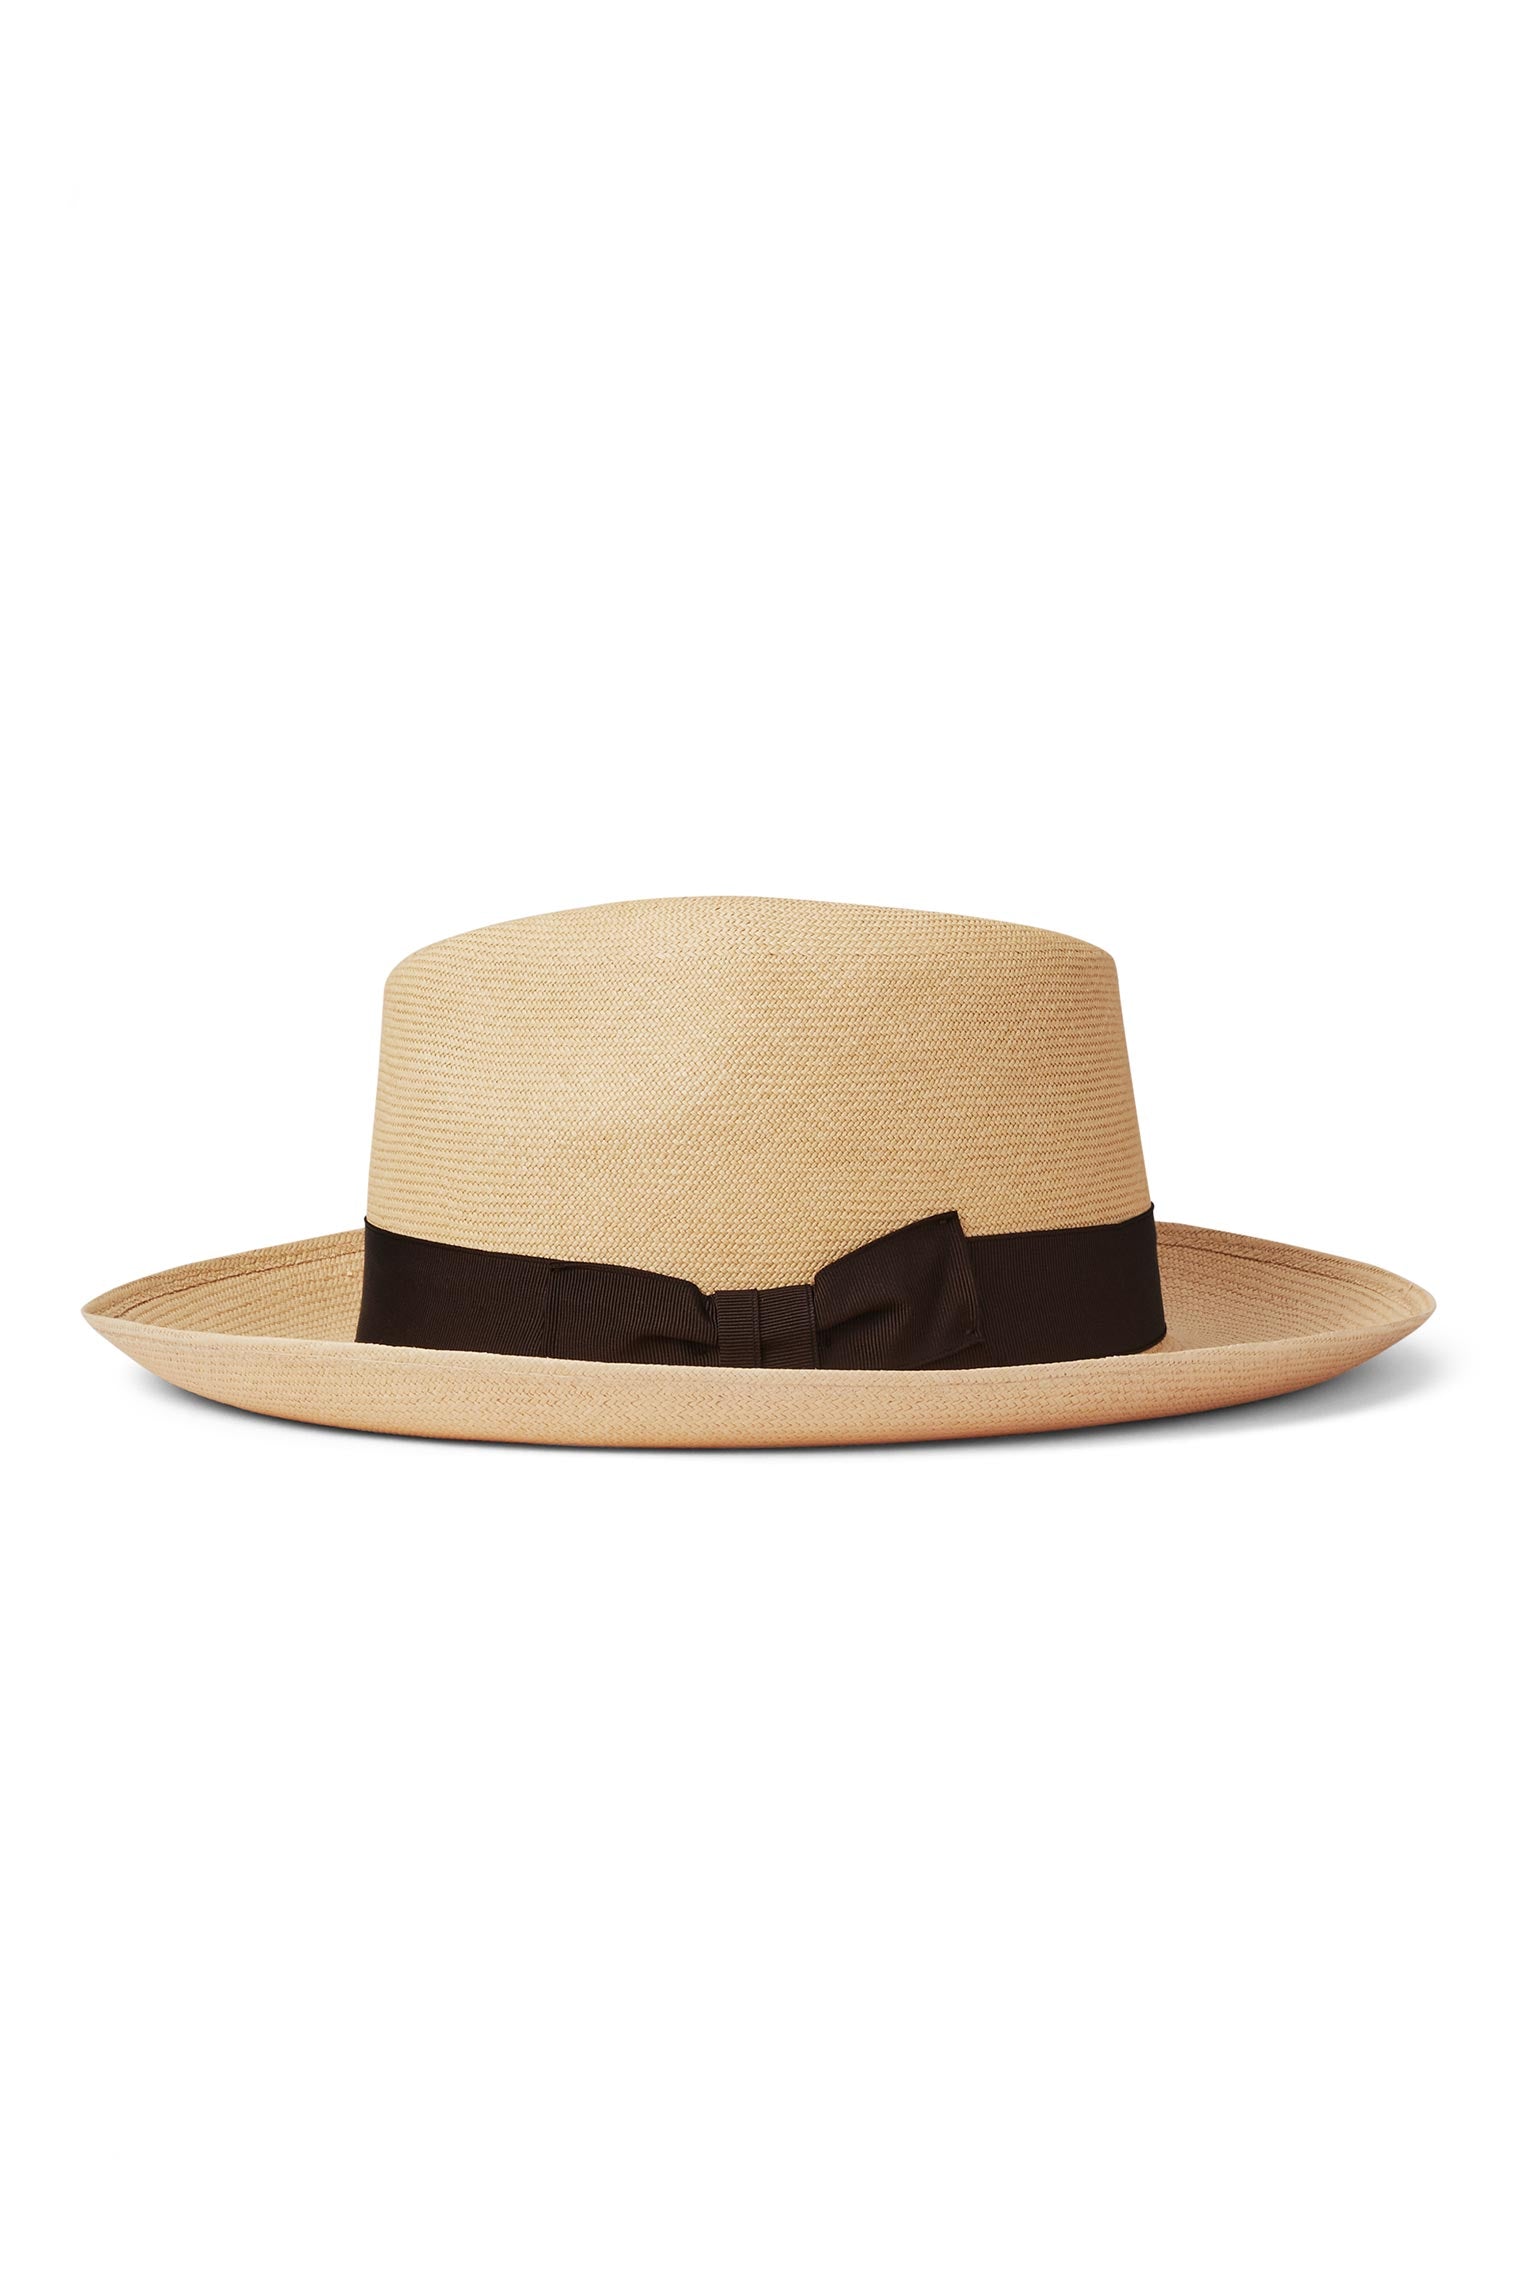 Ventnor Cuenca Ultra-fino Panama - Panamas and Sun Hats for Men - Lock & Co. Hatters London UK